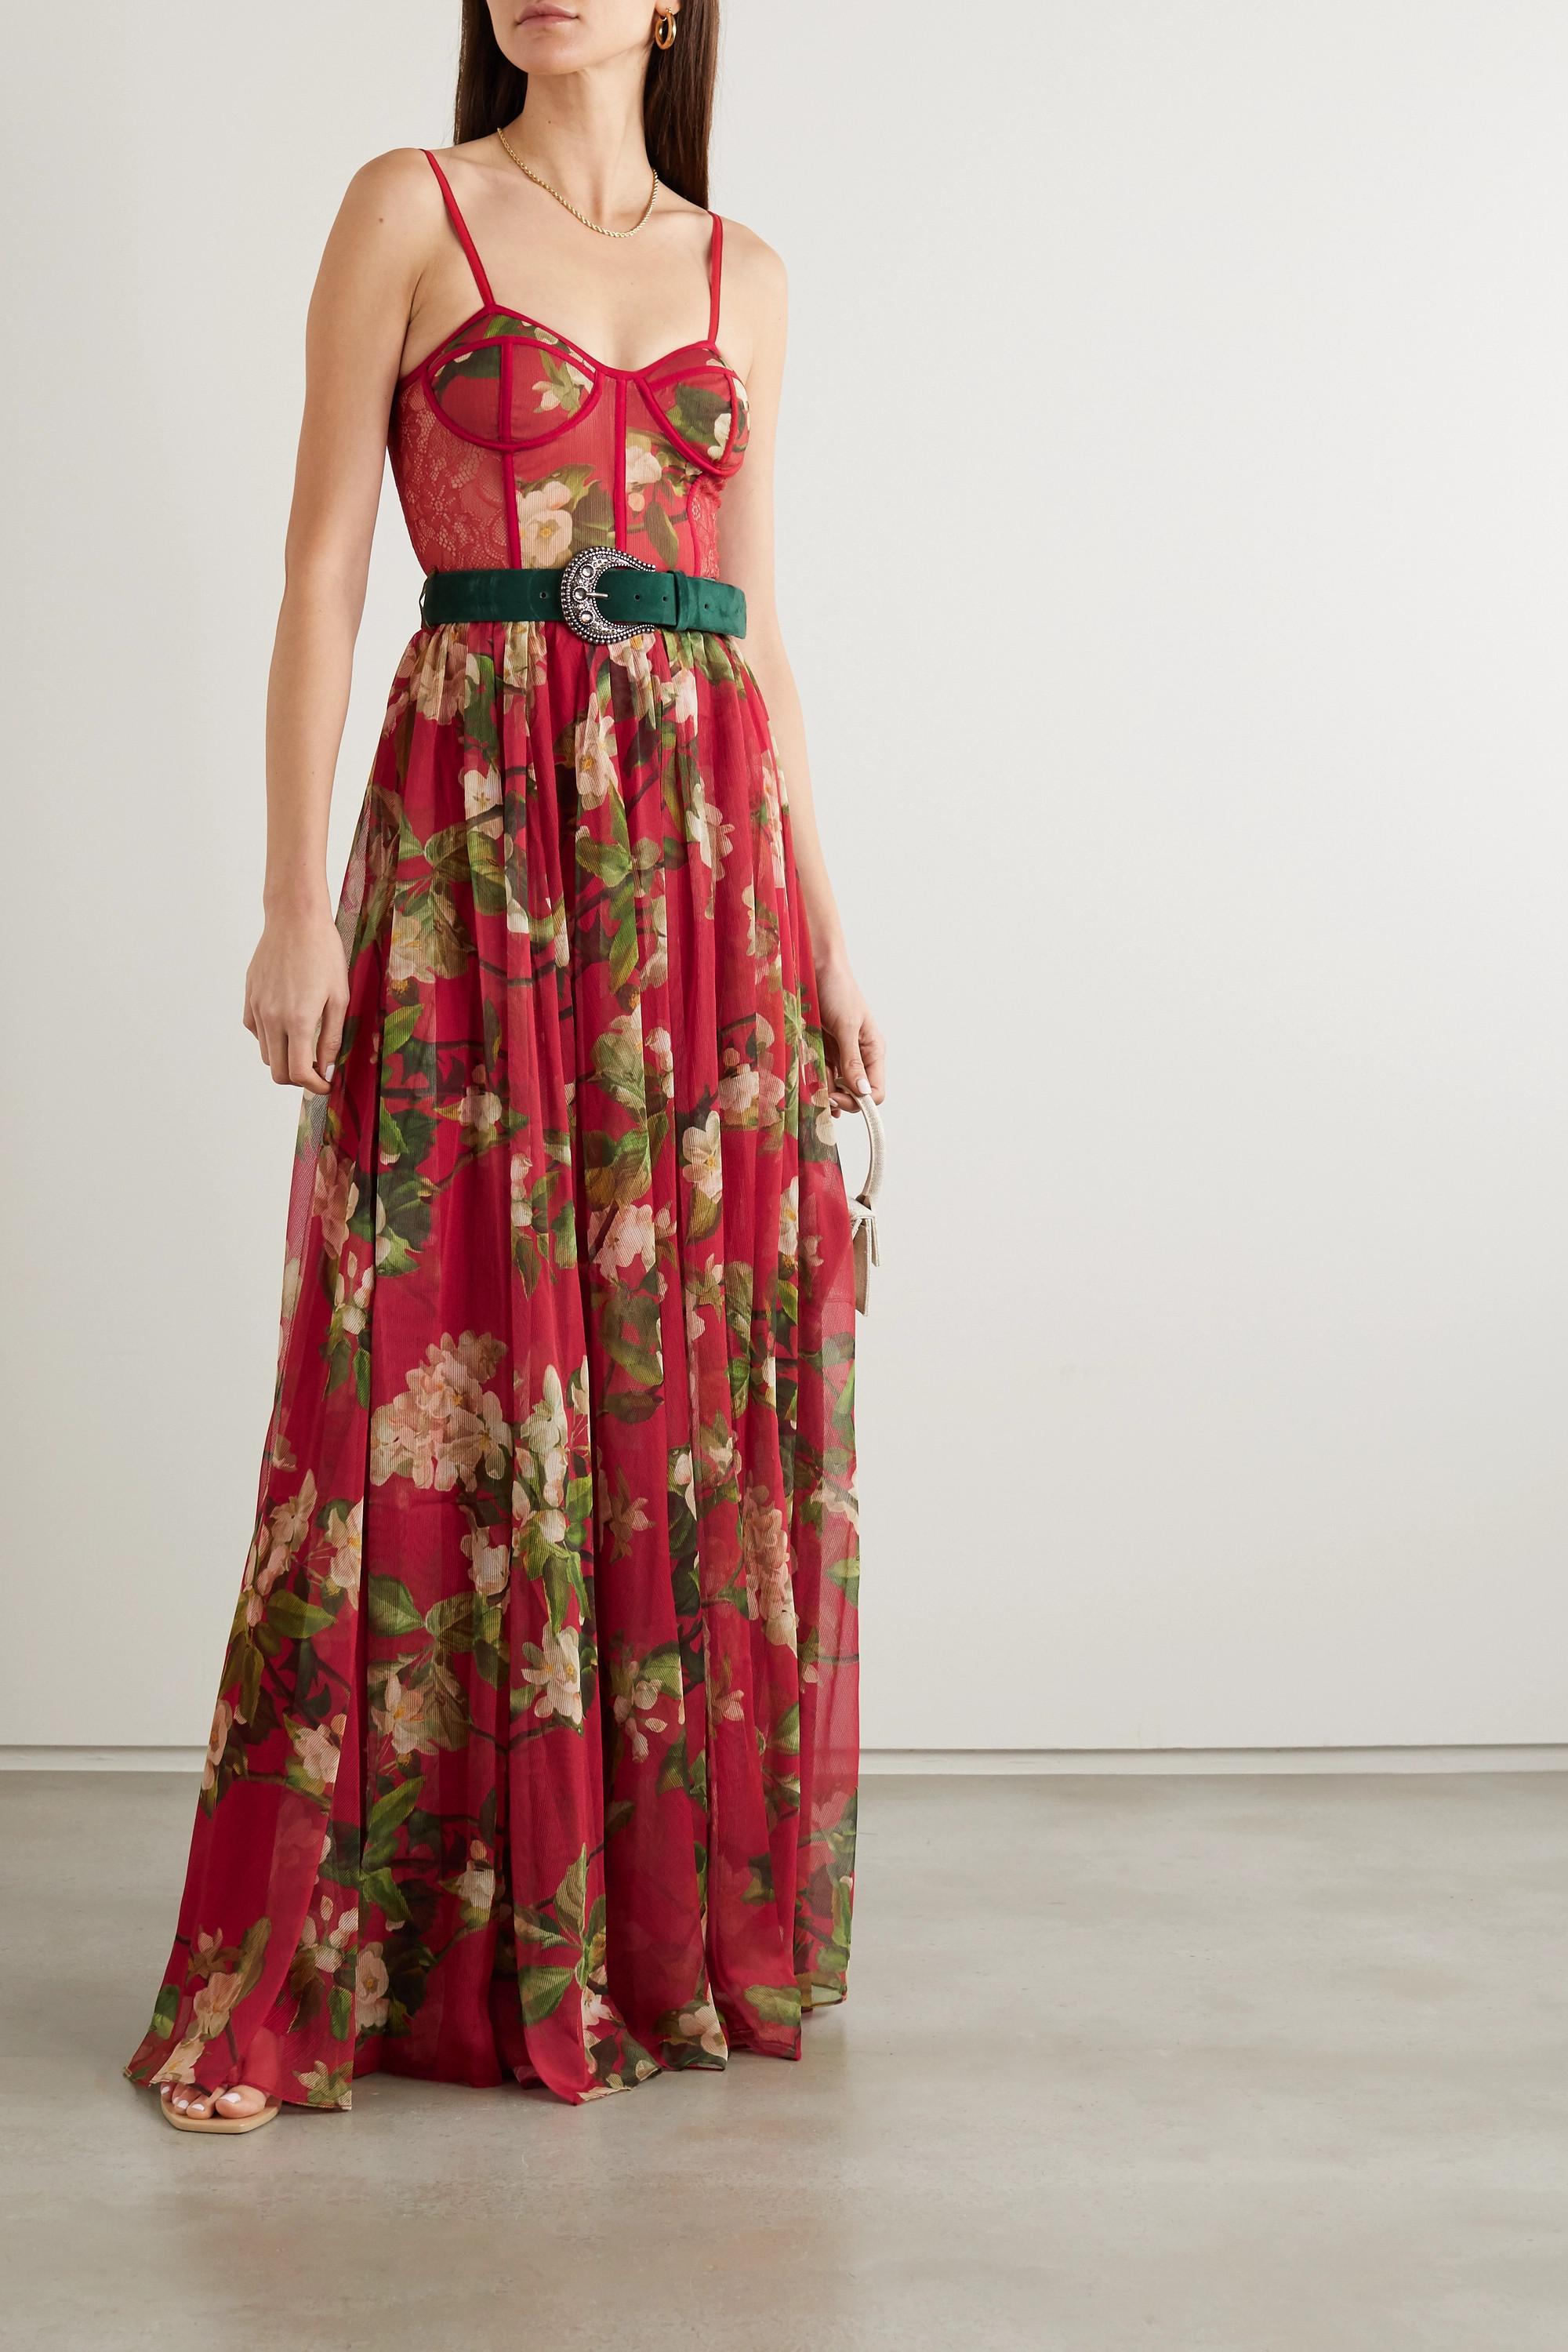 https://cdna.lystit.com/photos/net-a-porter/c7c3fad3/patbo-designer-red-Belted-Floral-print-Chiffon-And-Lace-Maxi-Dress.jpeg